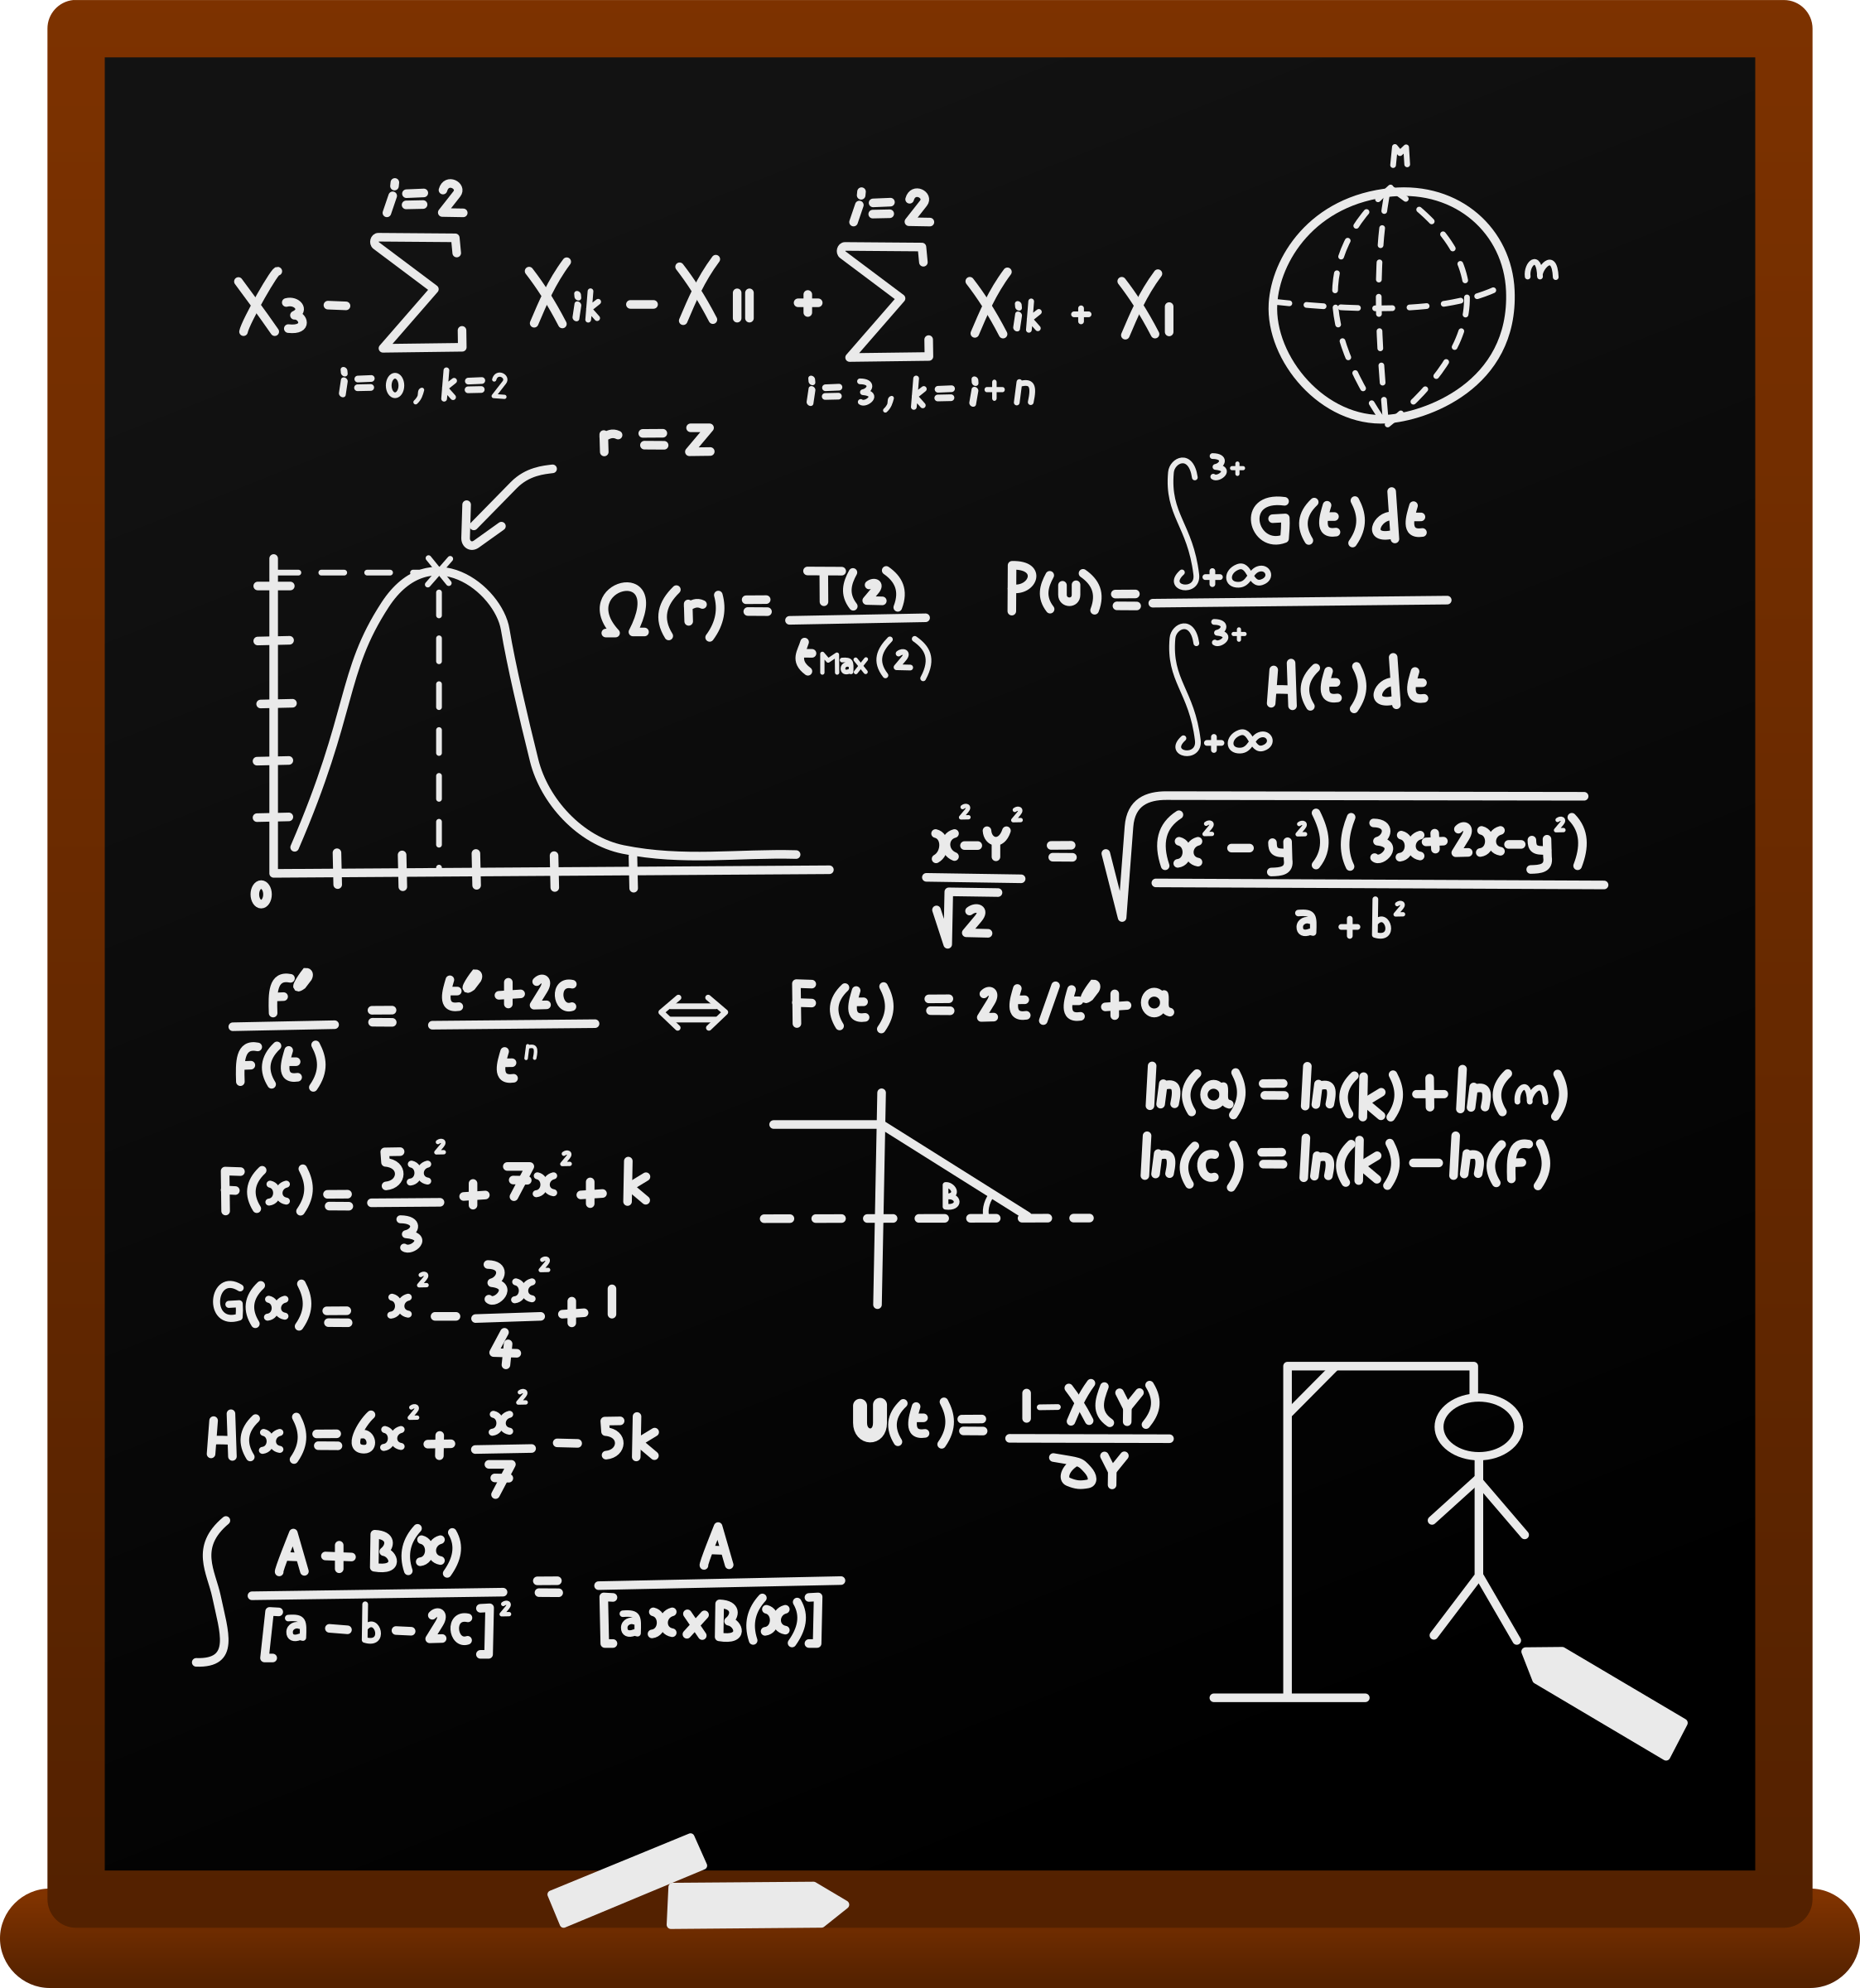 Blackboard calculation